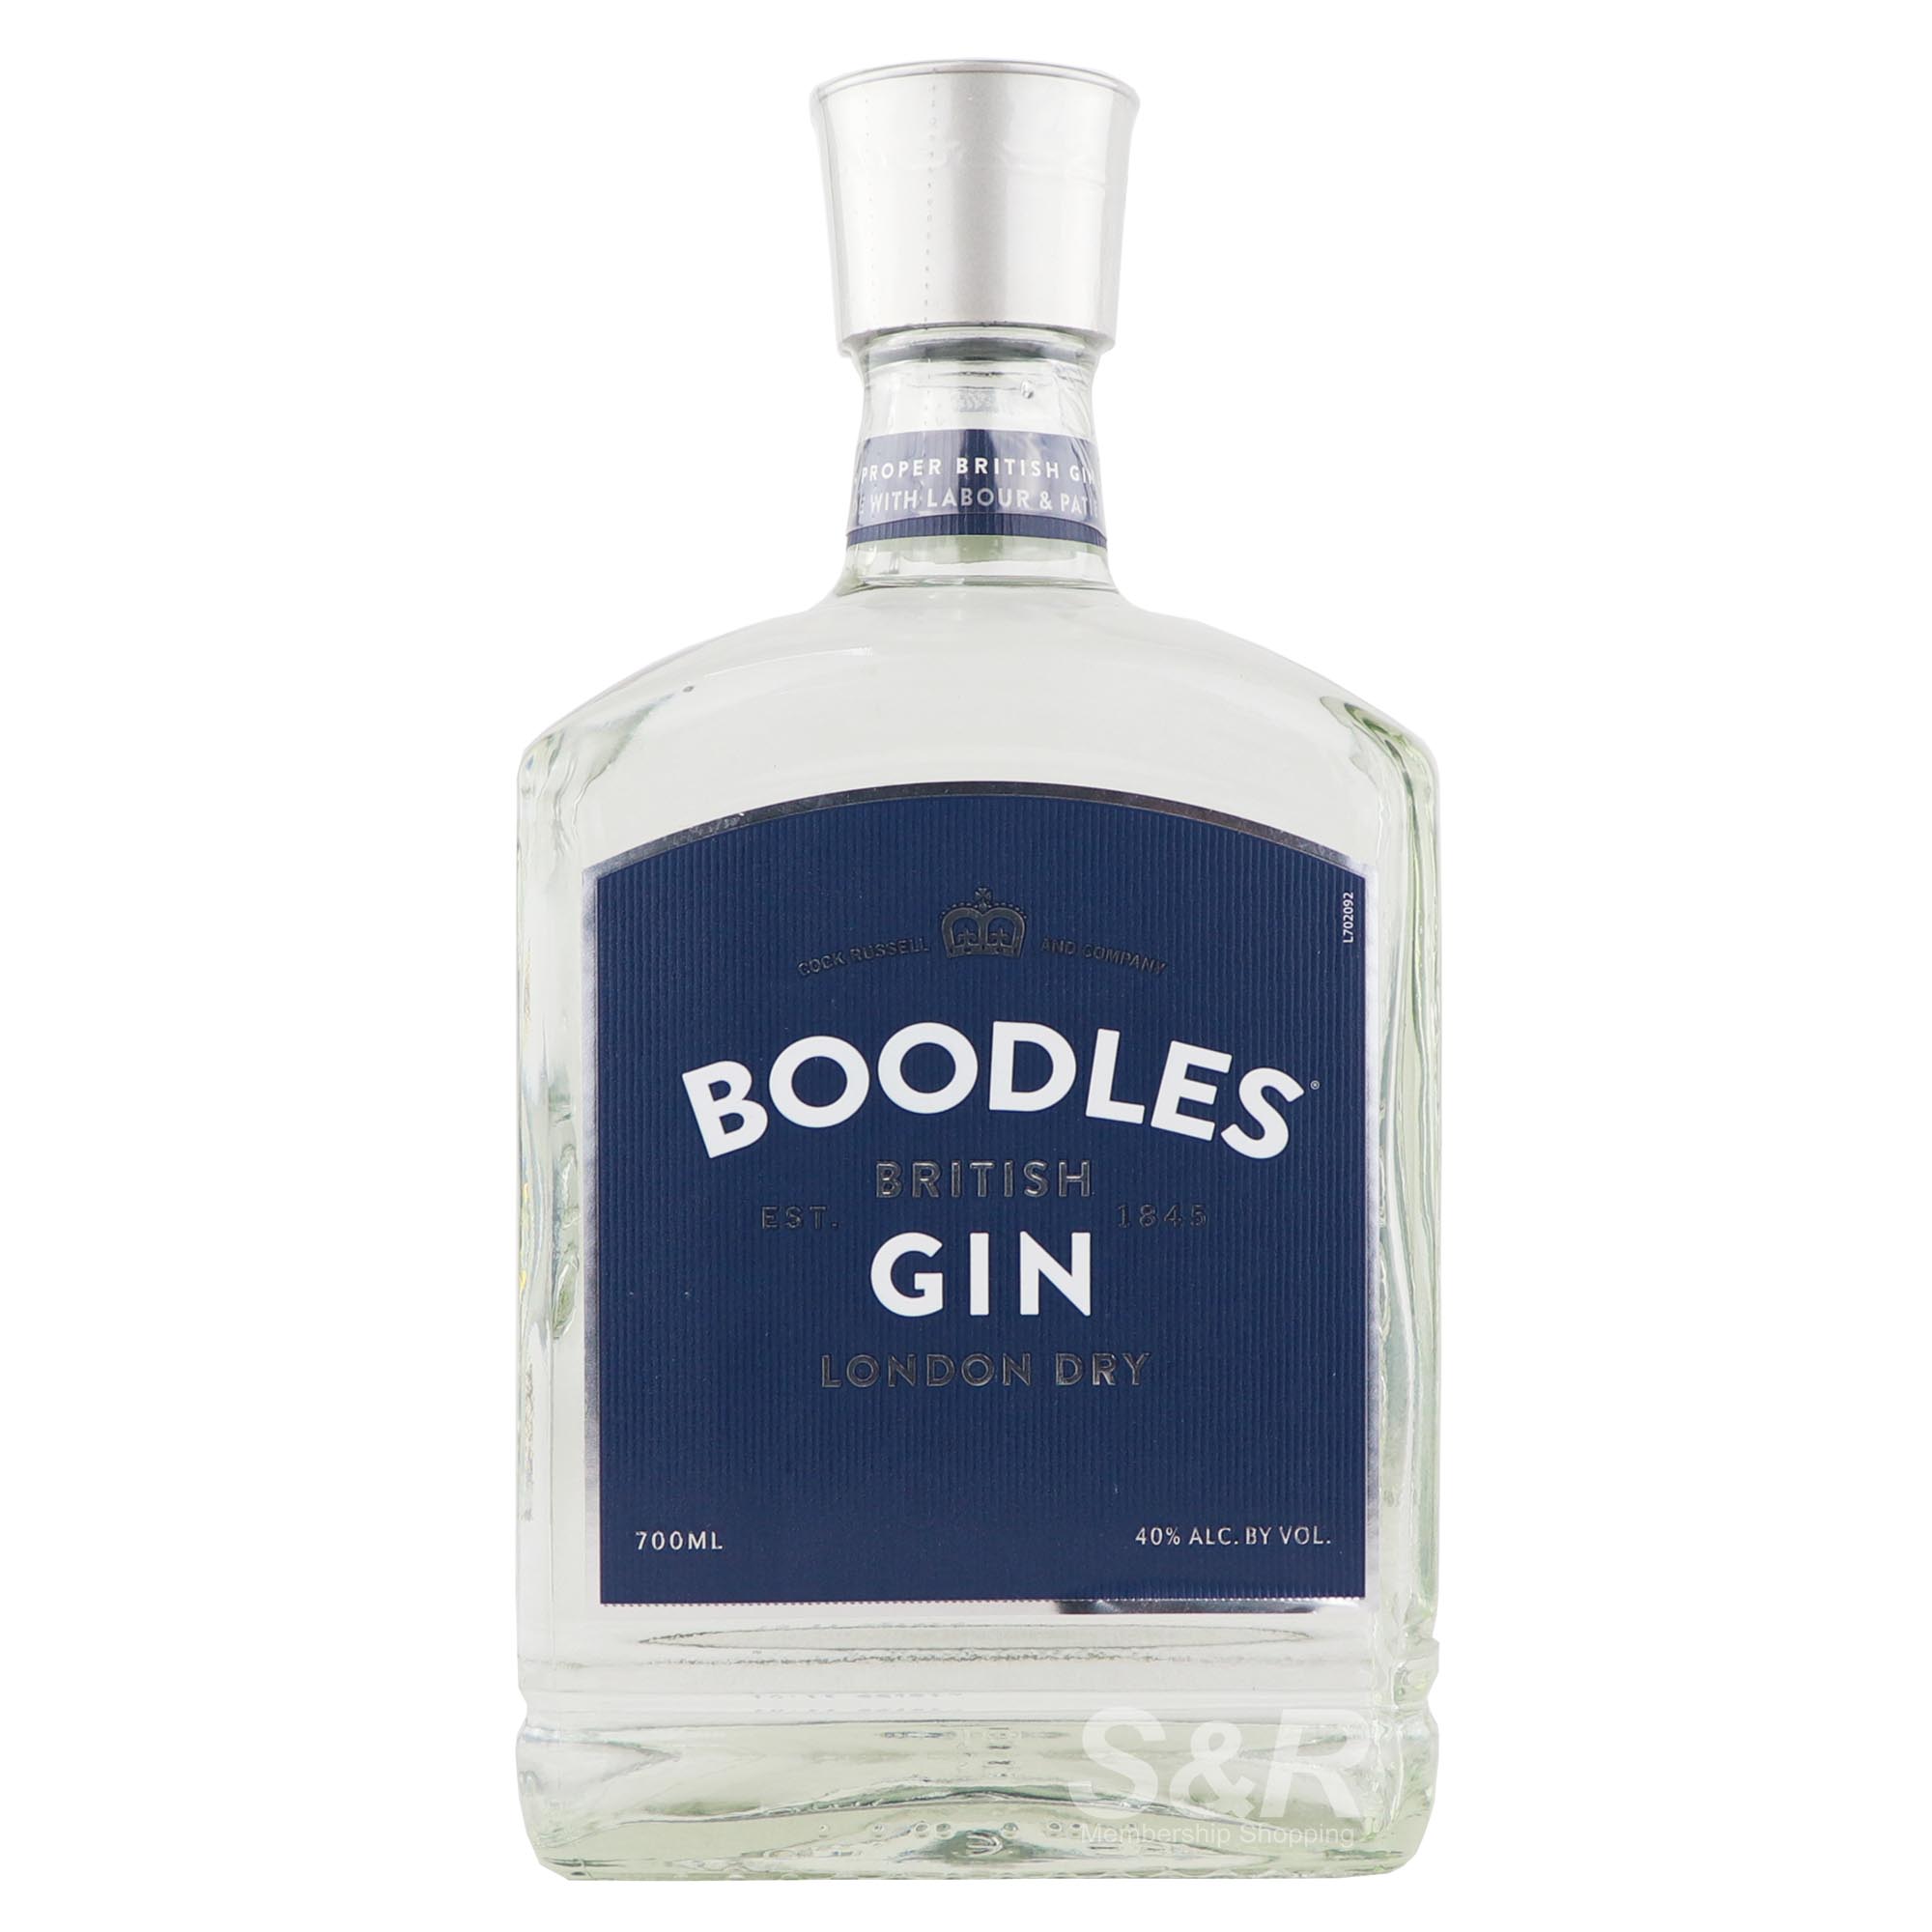 Boodles London Dry Gin 700mL